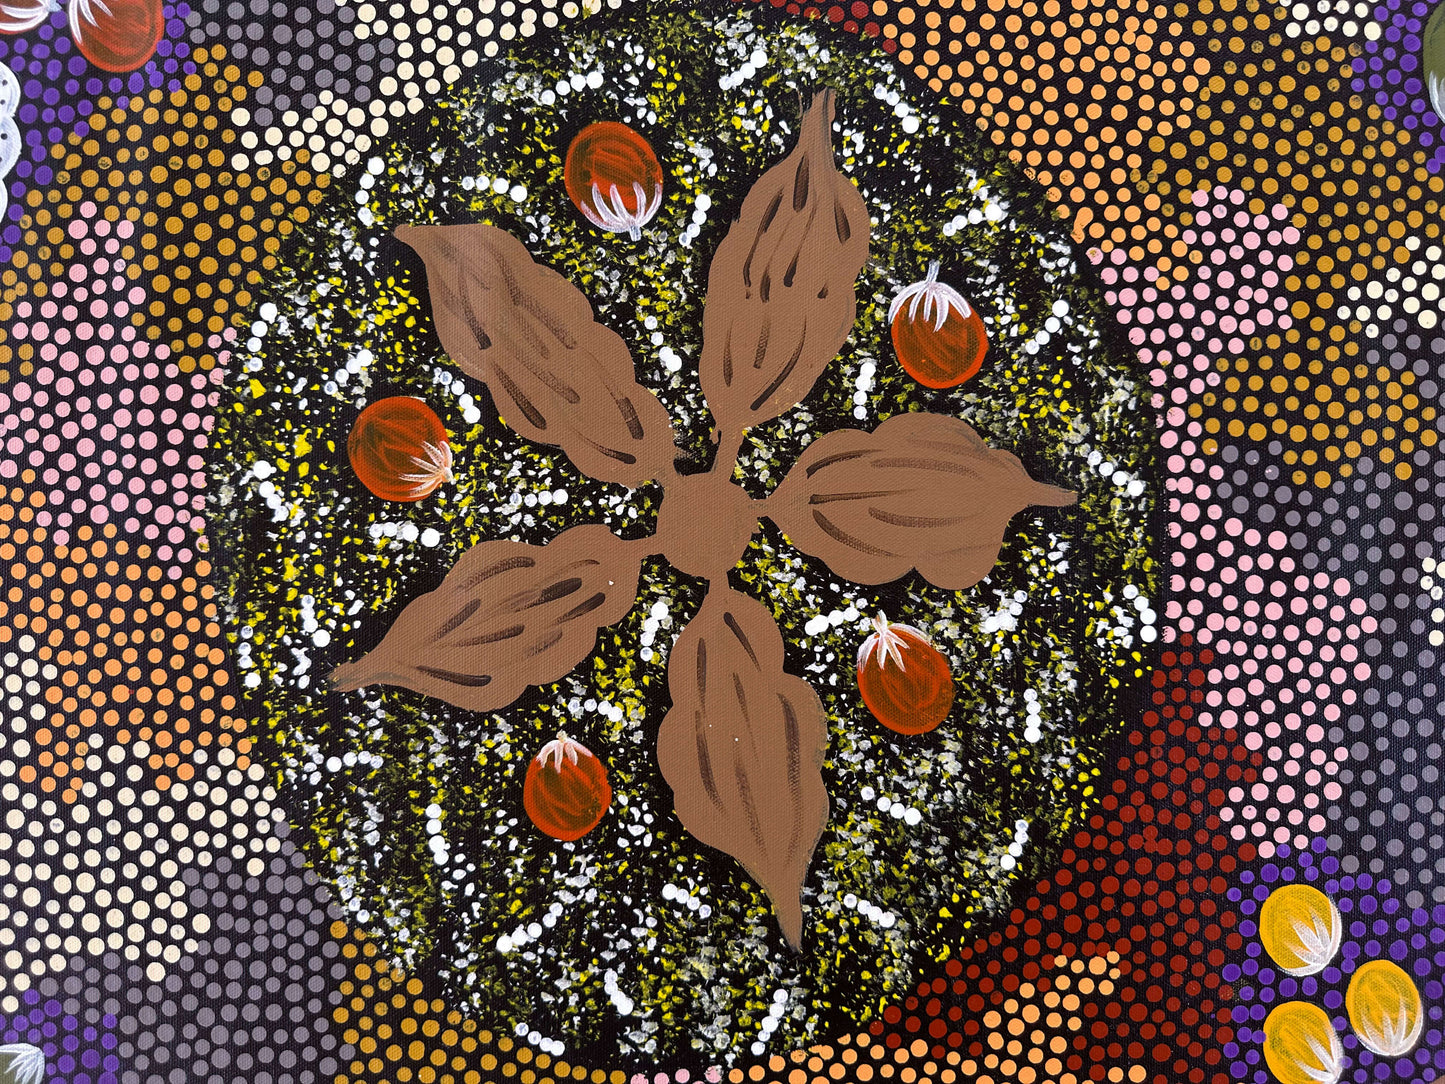 Patsy Ross + Ti Tree + Indigenous Art + Aboriginal Art + Australian Art + Bush Tucker + Dreaming + Witchetty Grub + Bush Berries + Bush Banana + Bush Tomato + Darwin Based Gallery + Dot Art Painting + Dot Painting +